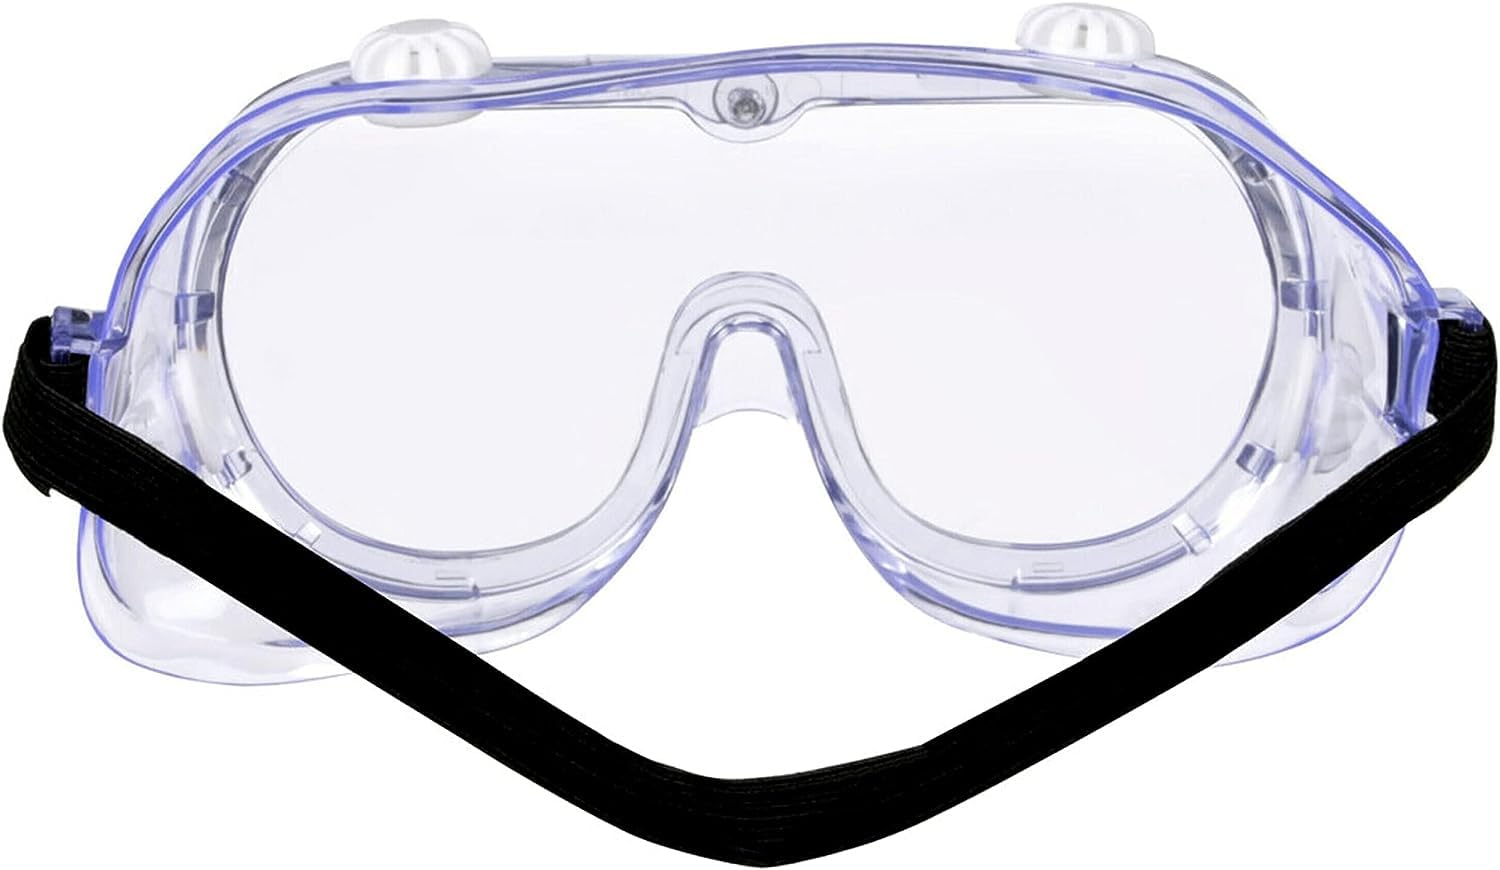 KeeboMed Chemical Splash/Impact Safety Goggle, Soft, Adjustable 1 -Pack